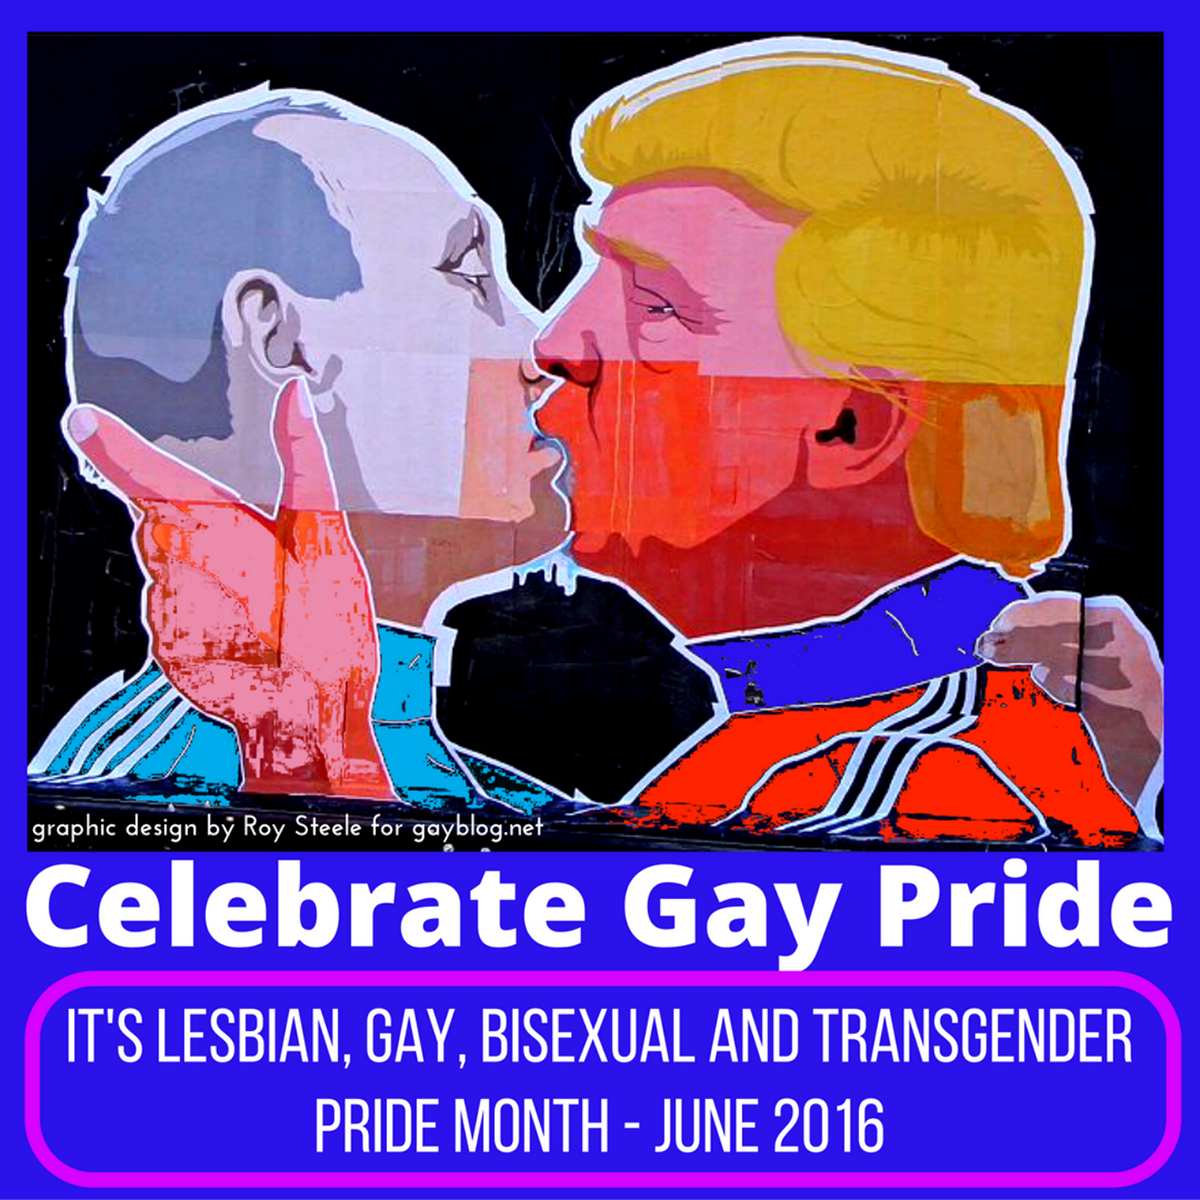 Donald Trump Vladimir Putin gay LGBT Gay Pride lgbt pride Trump politics